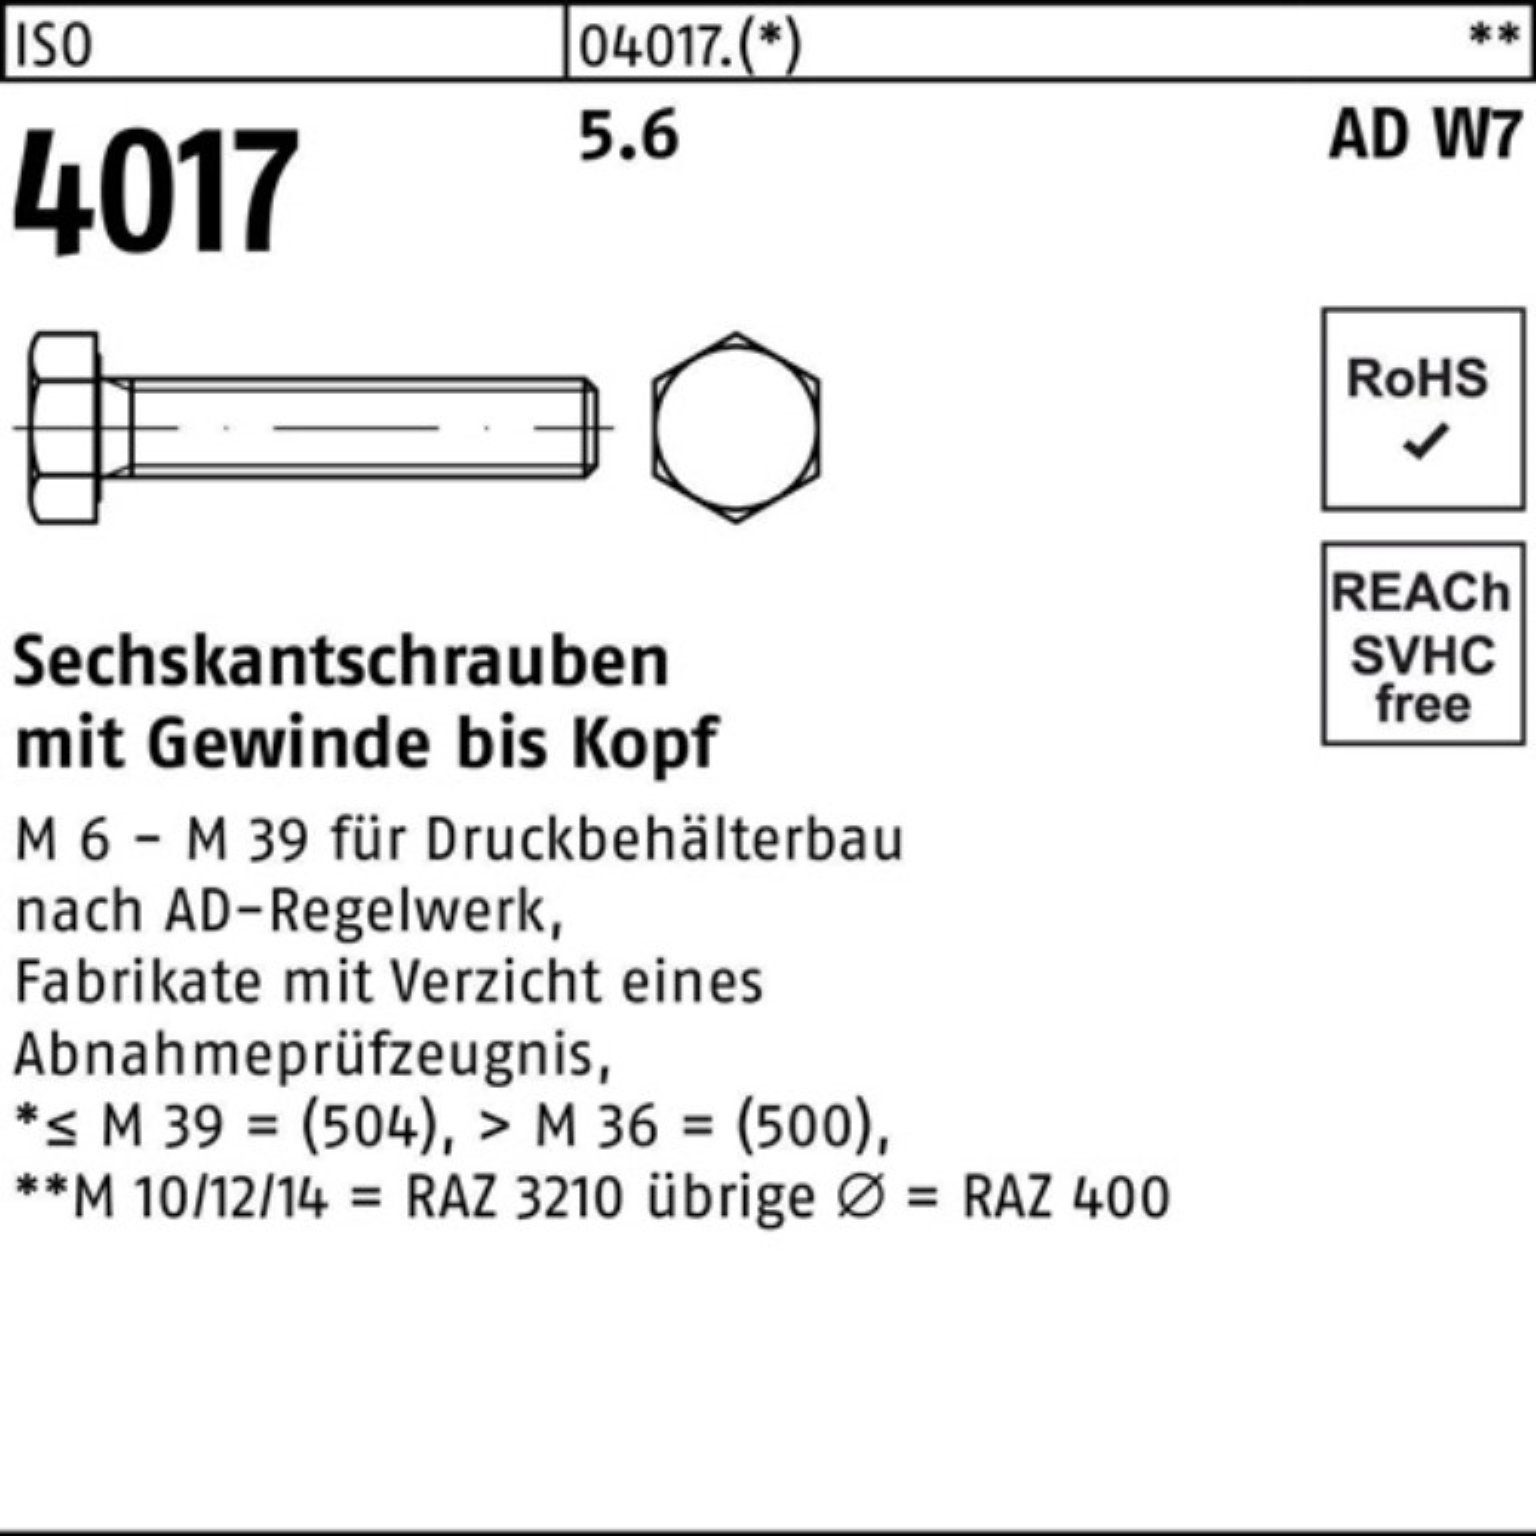 W7 VG AD Pack 5.6 Sechskantschraube Bufab Sechskantschraube 110 100er 4017 50 M12x Stück ISO